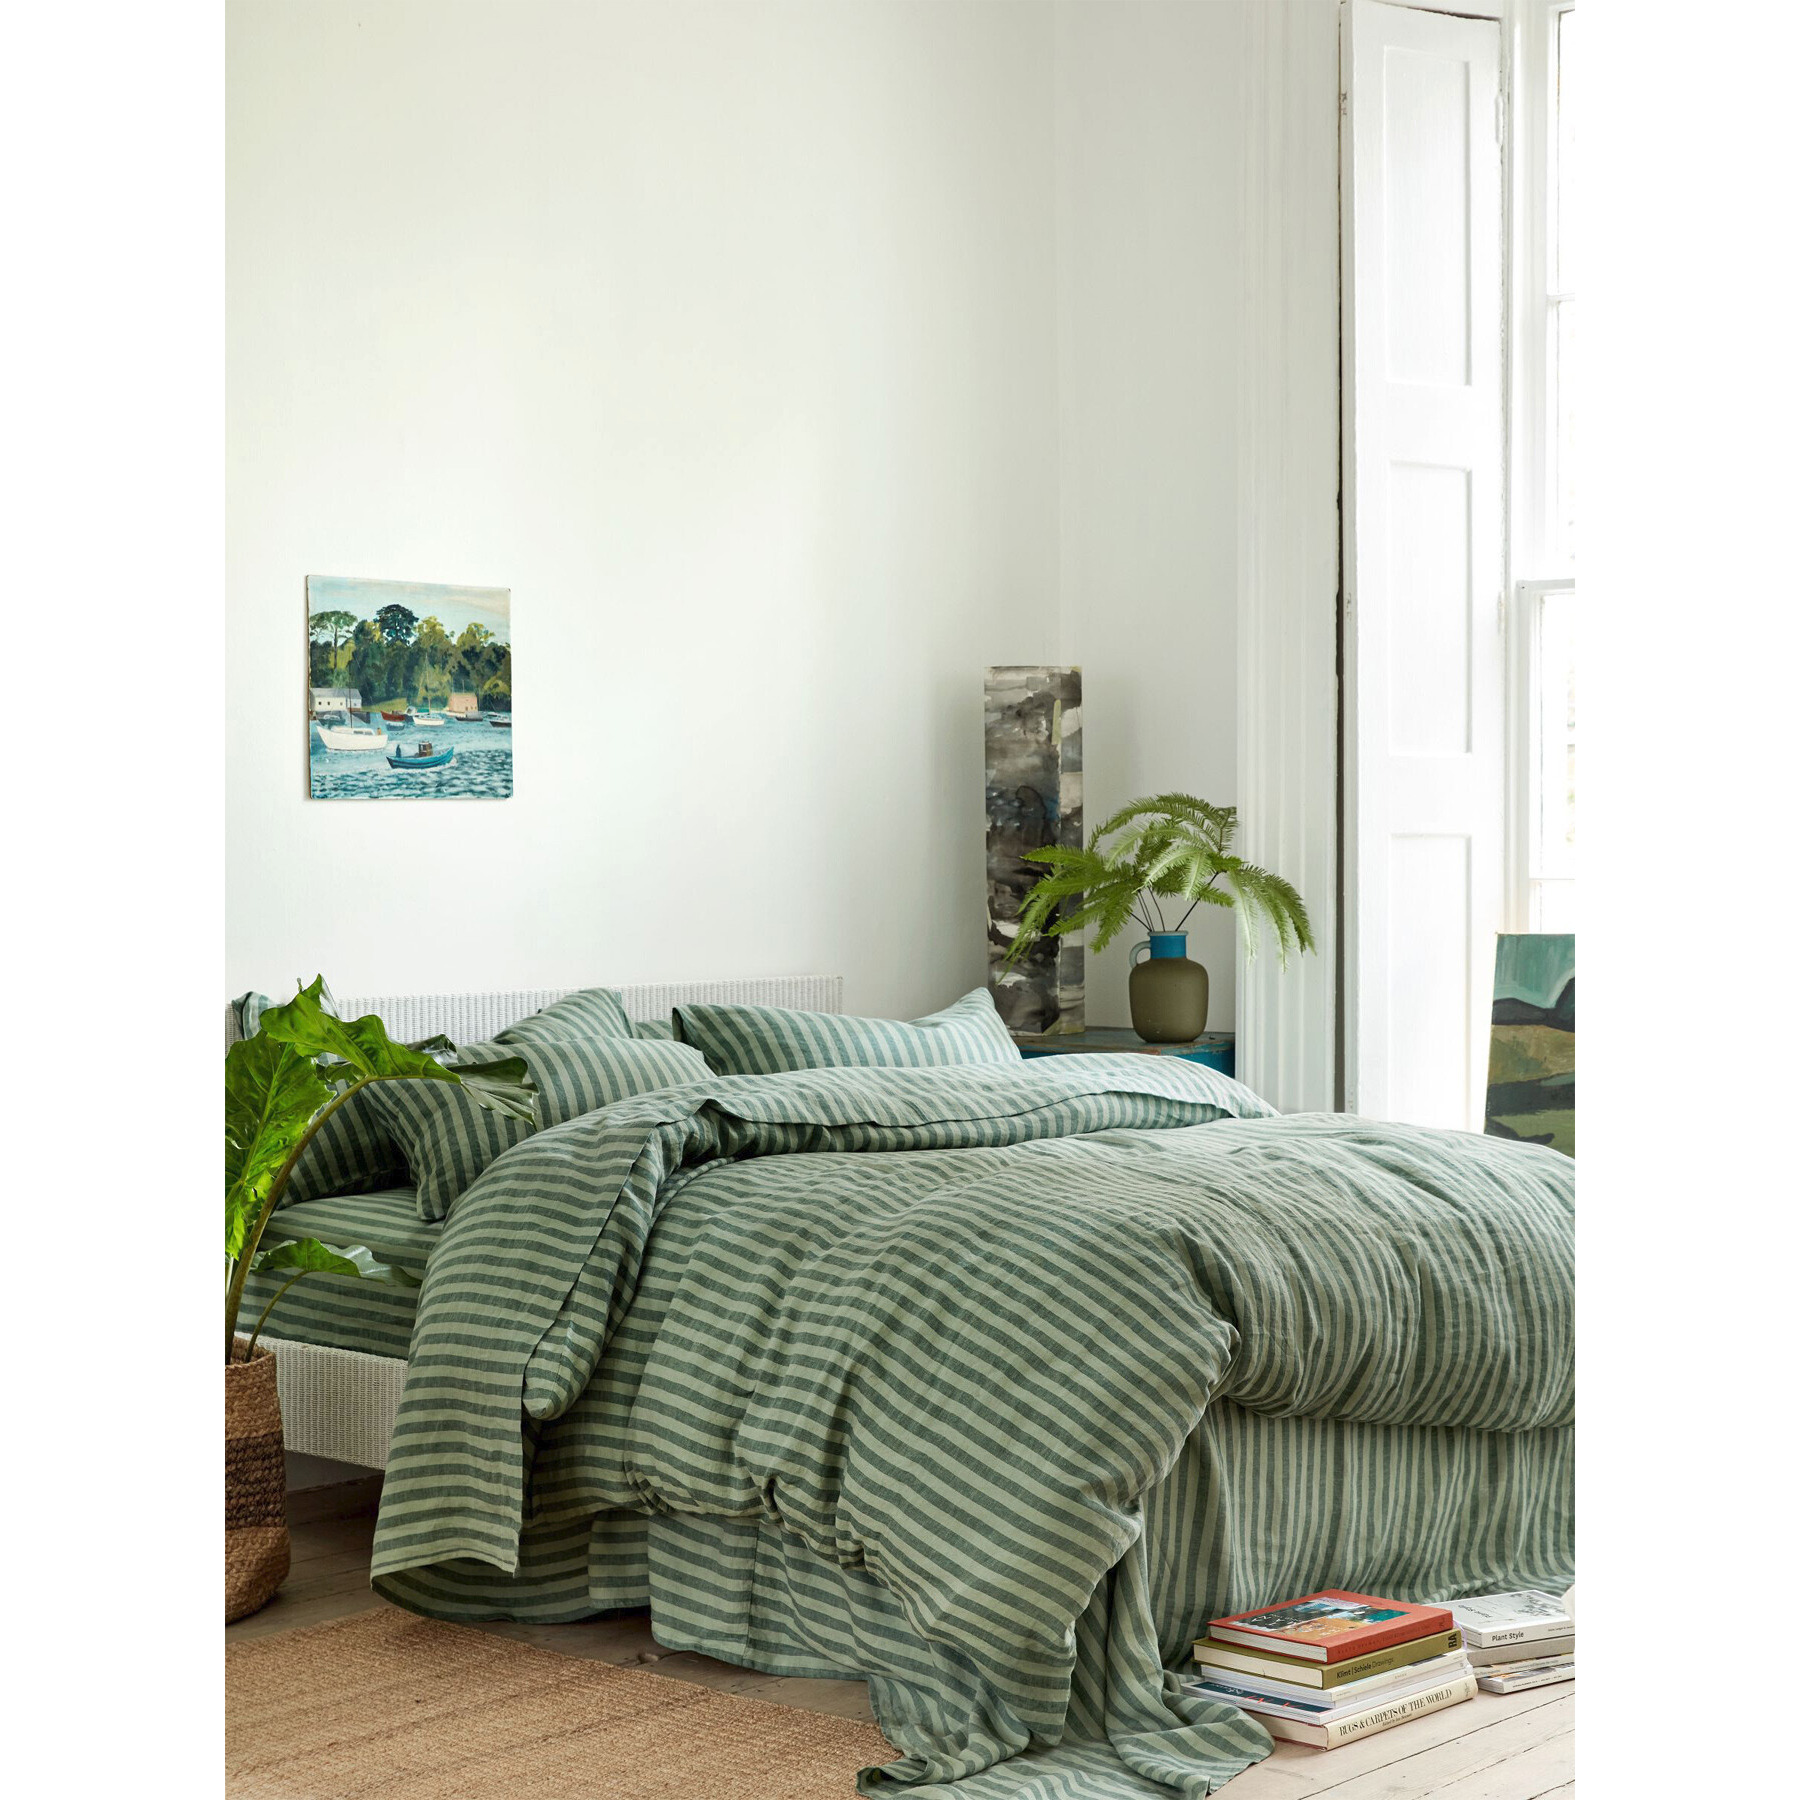 Piglet in Bed Pembroke Stripe Linen Pillowcases (pair) - Size Standard Green - image 1